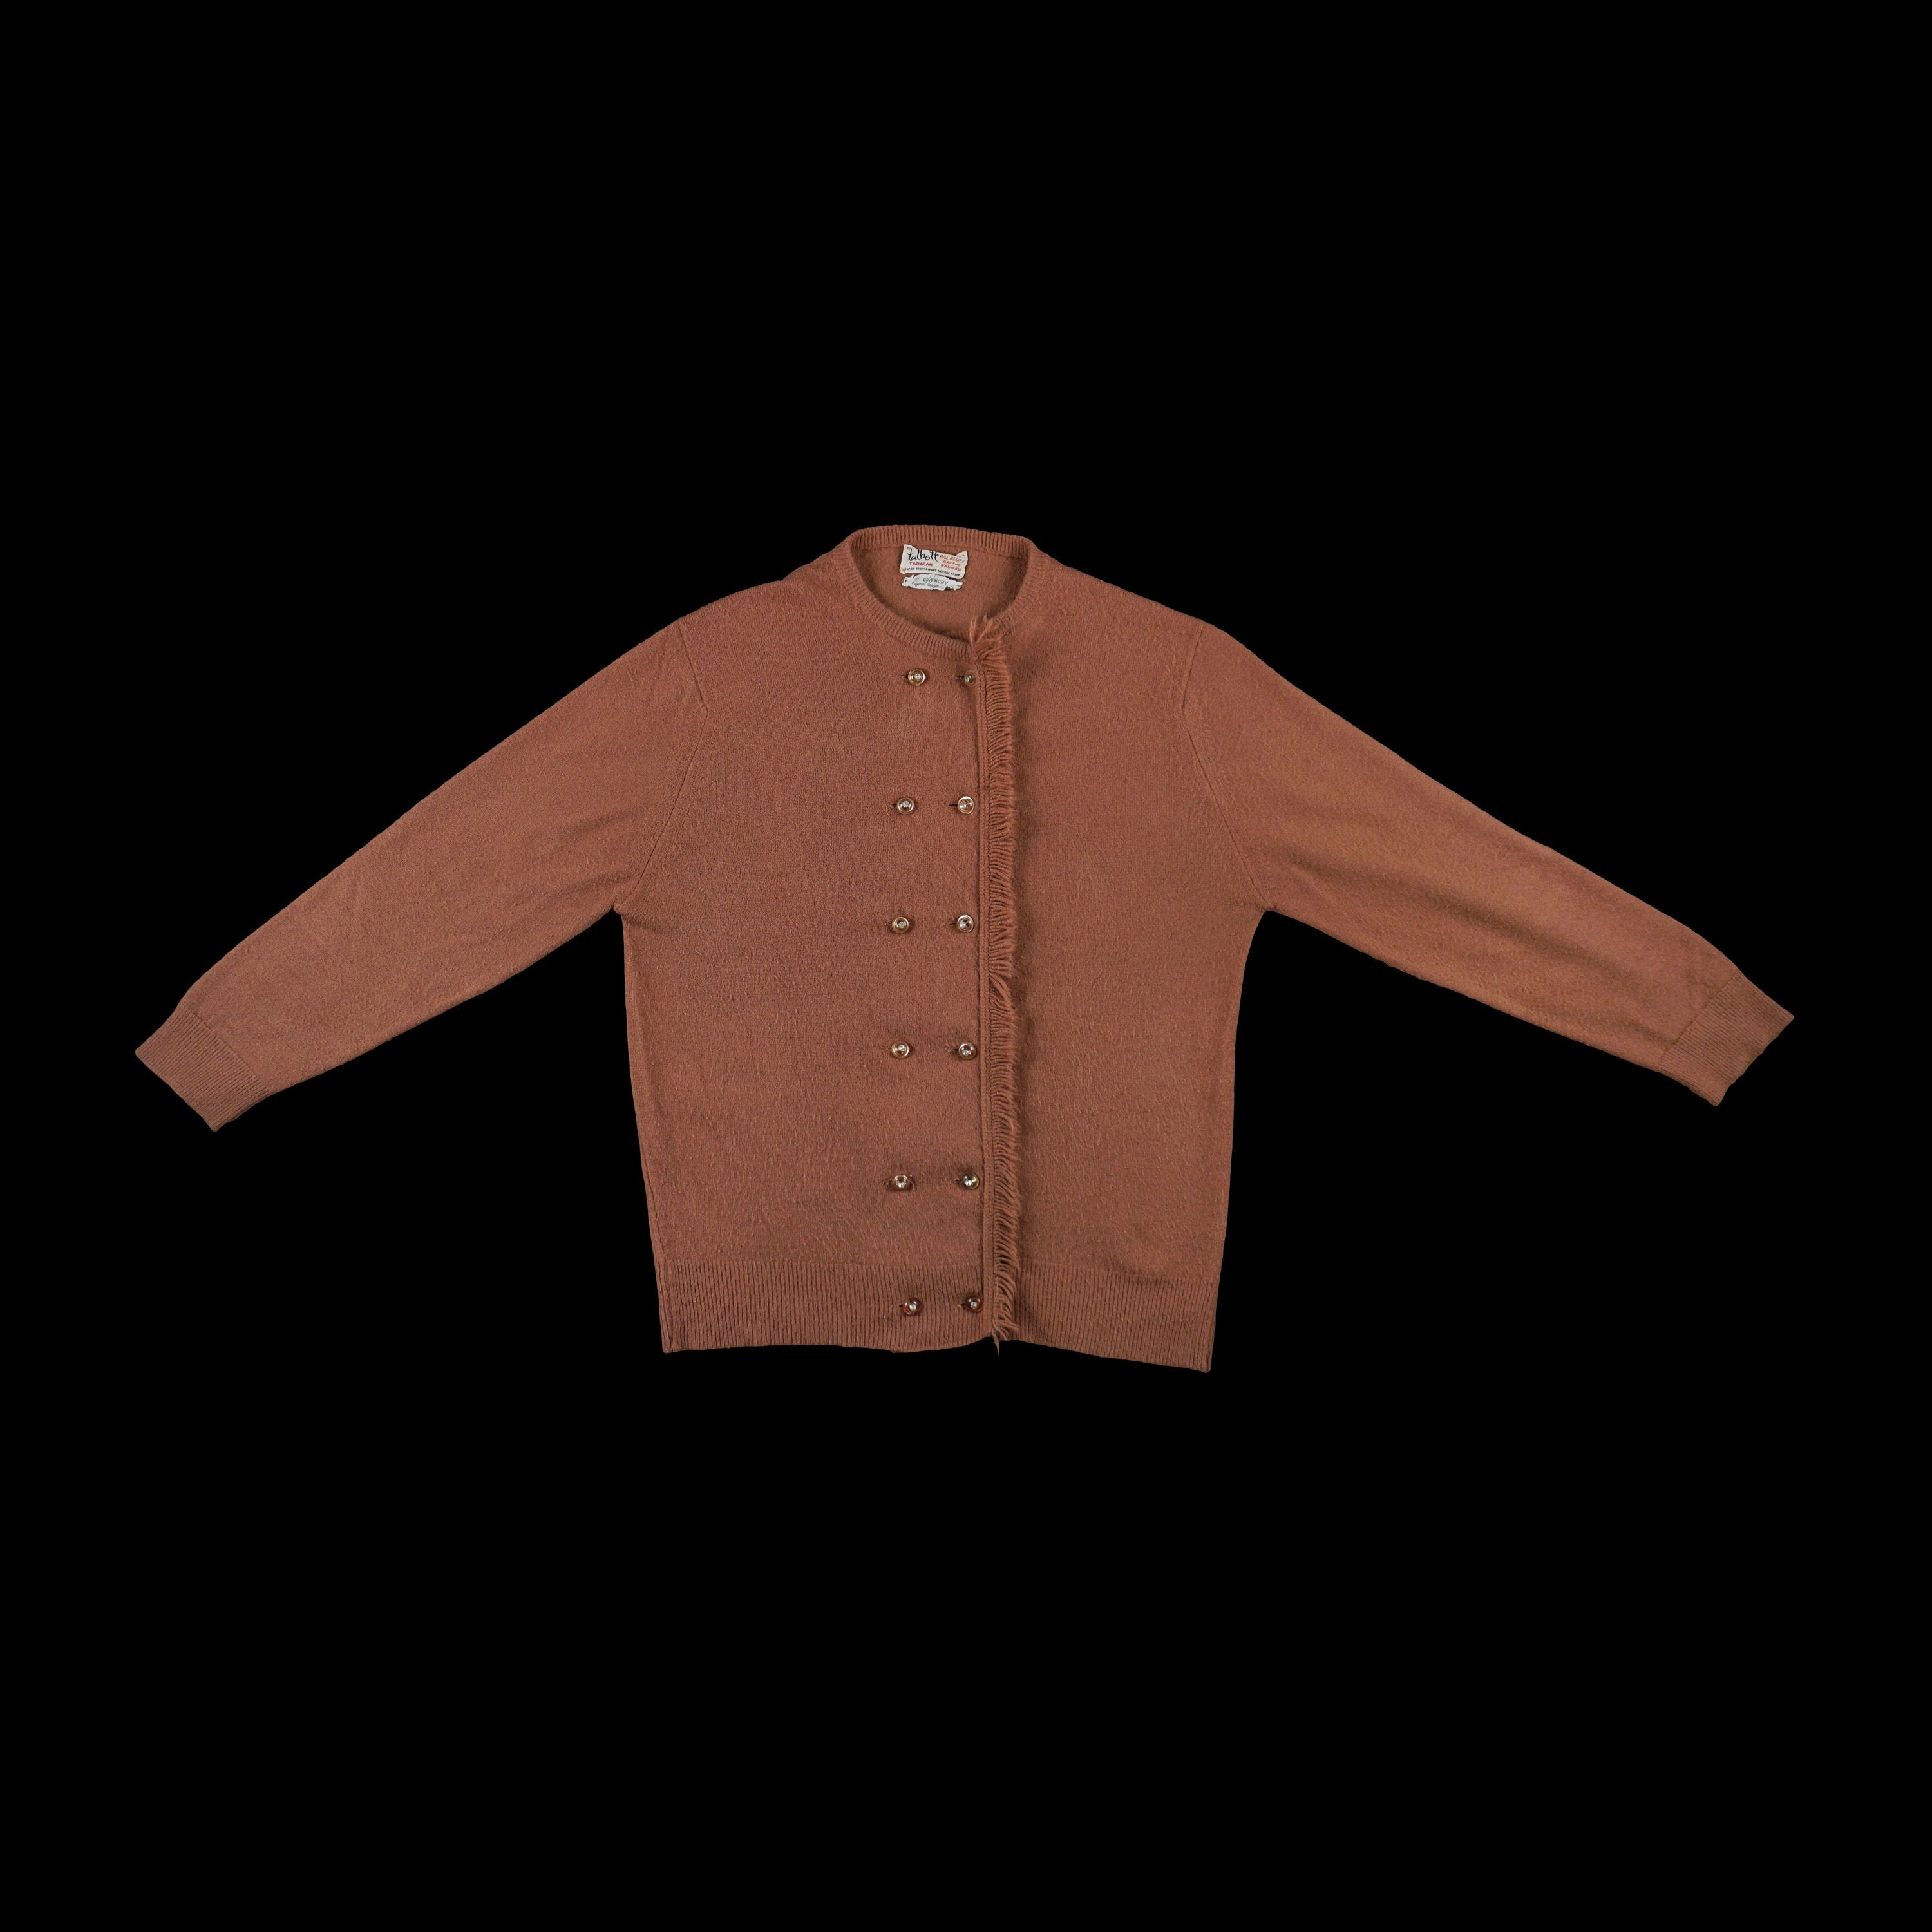 Vintage 1950's Givenchy Sweater Talbott Brown Fringe Crew Neck Cardigan  Long Sleeve Rhinestone Designer Small RARE 